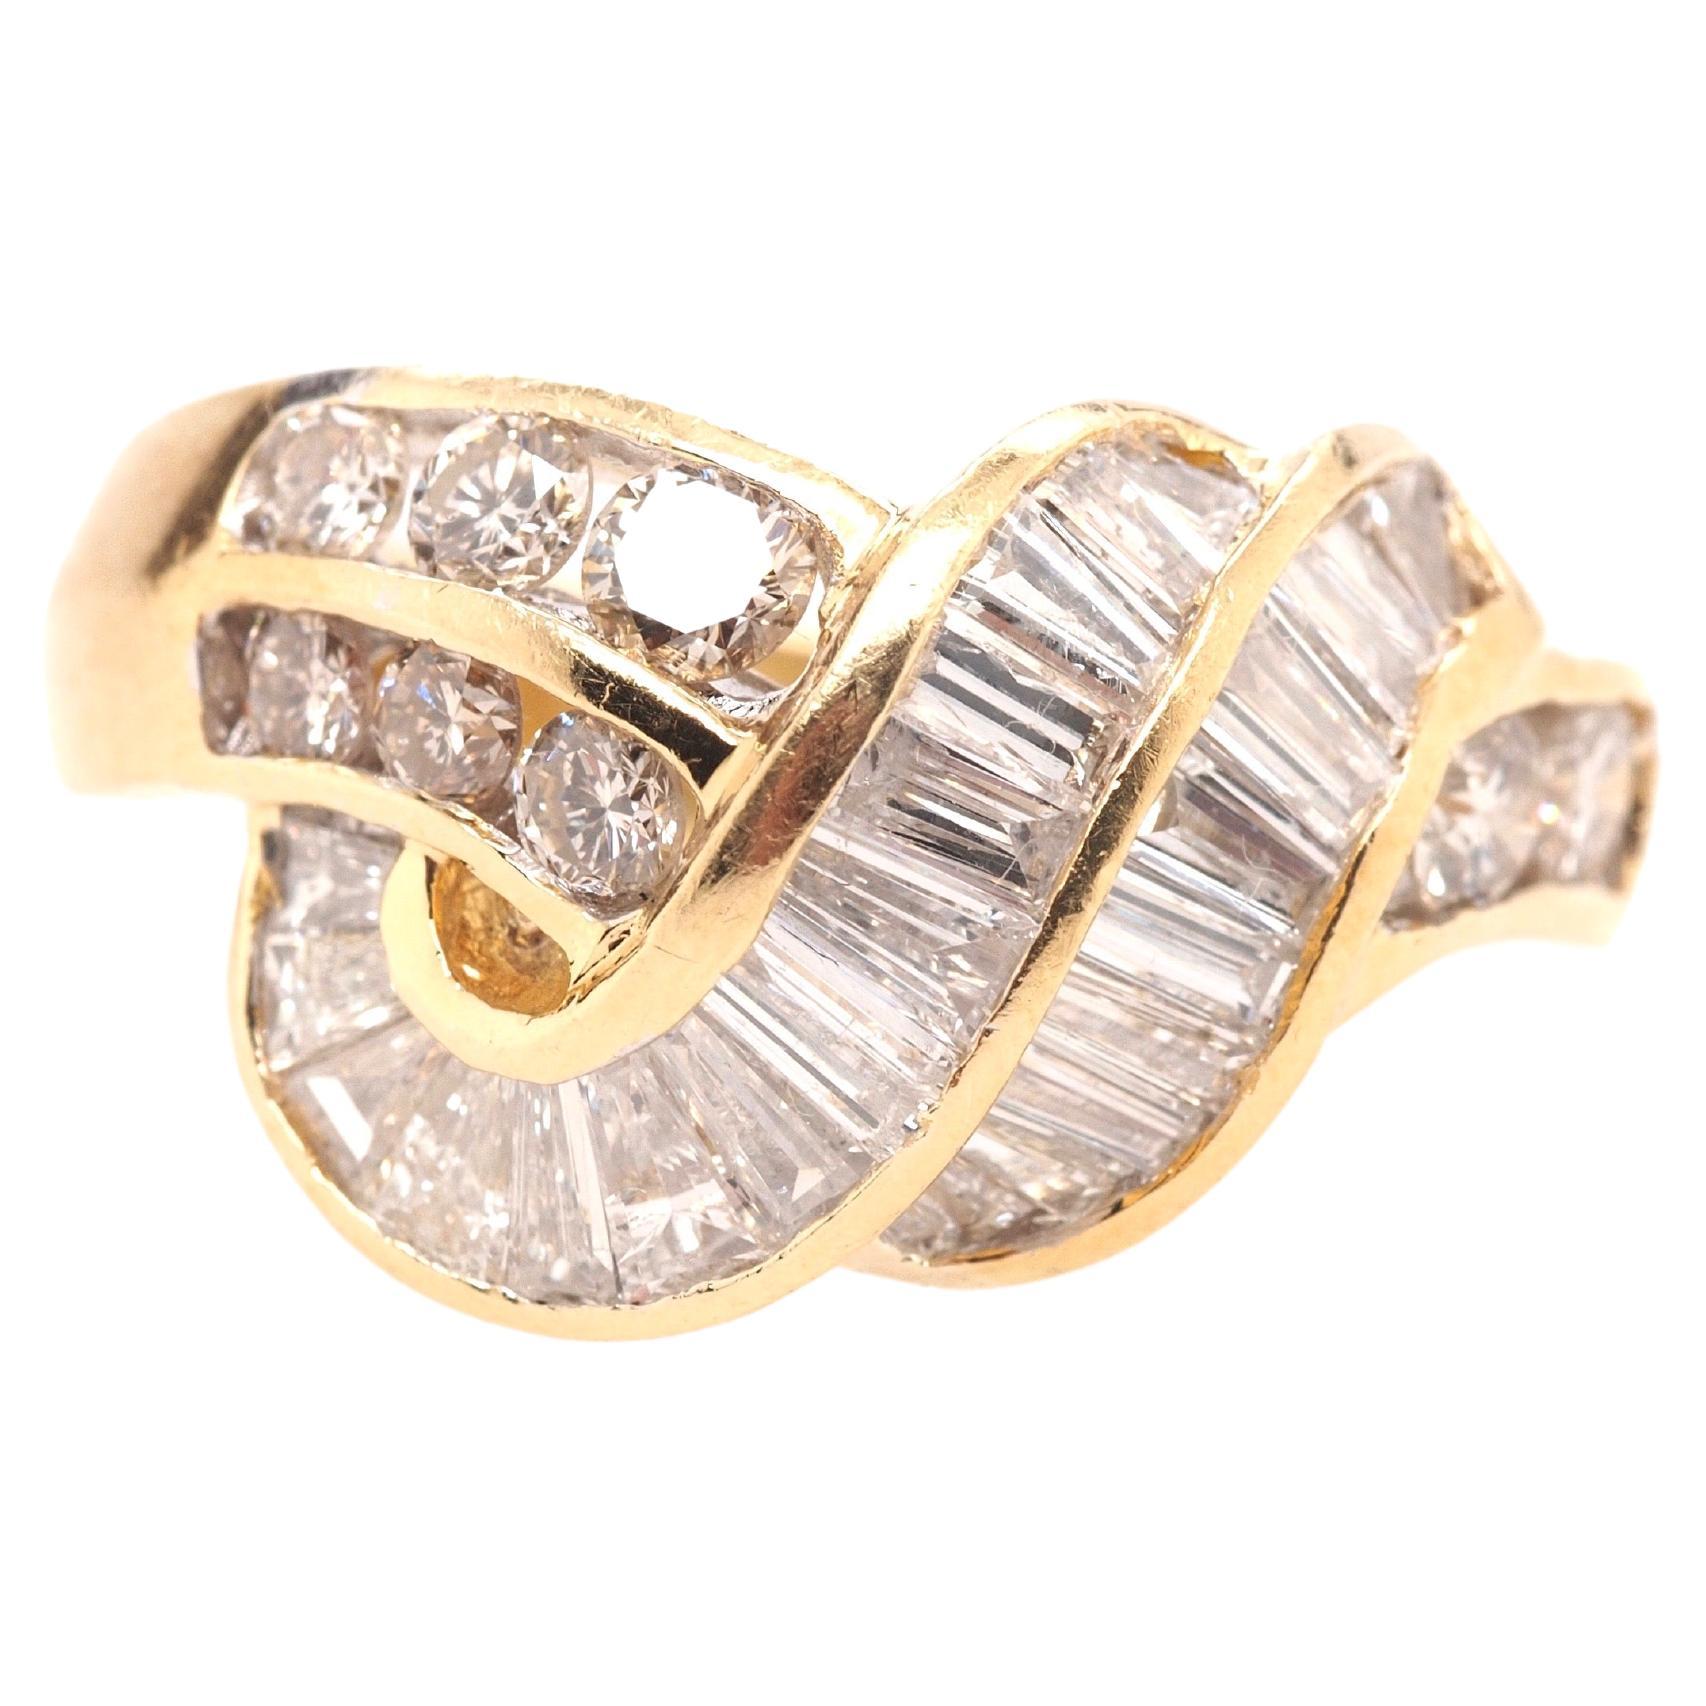 18K Yellow Gold Diamond Swirl Cocktail Ring